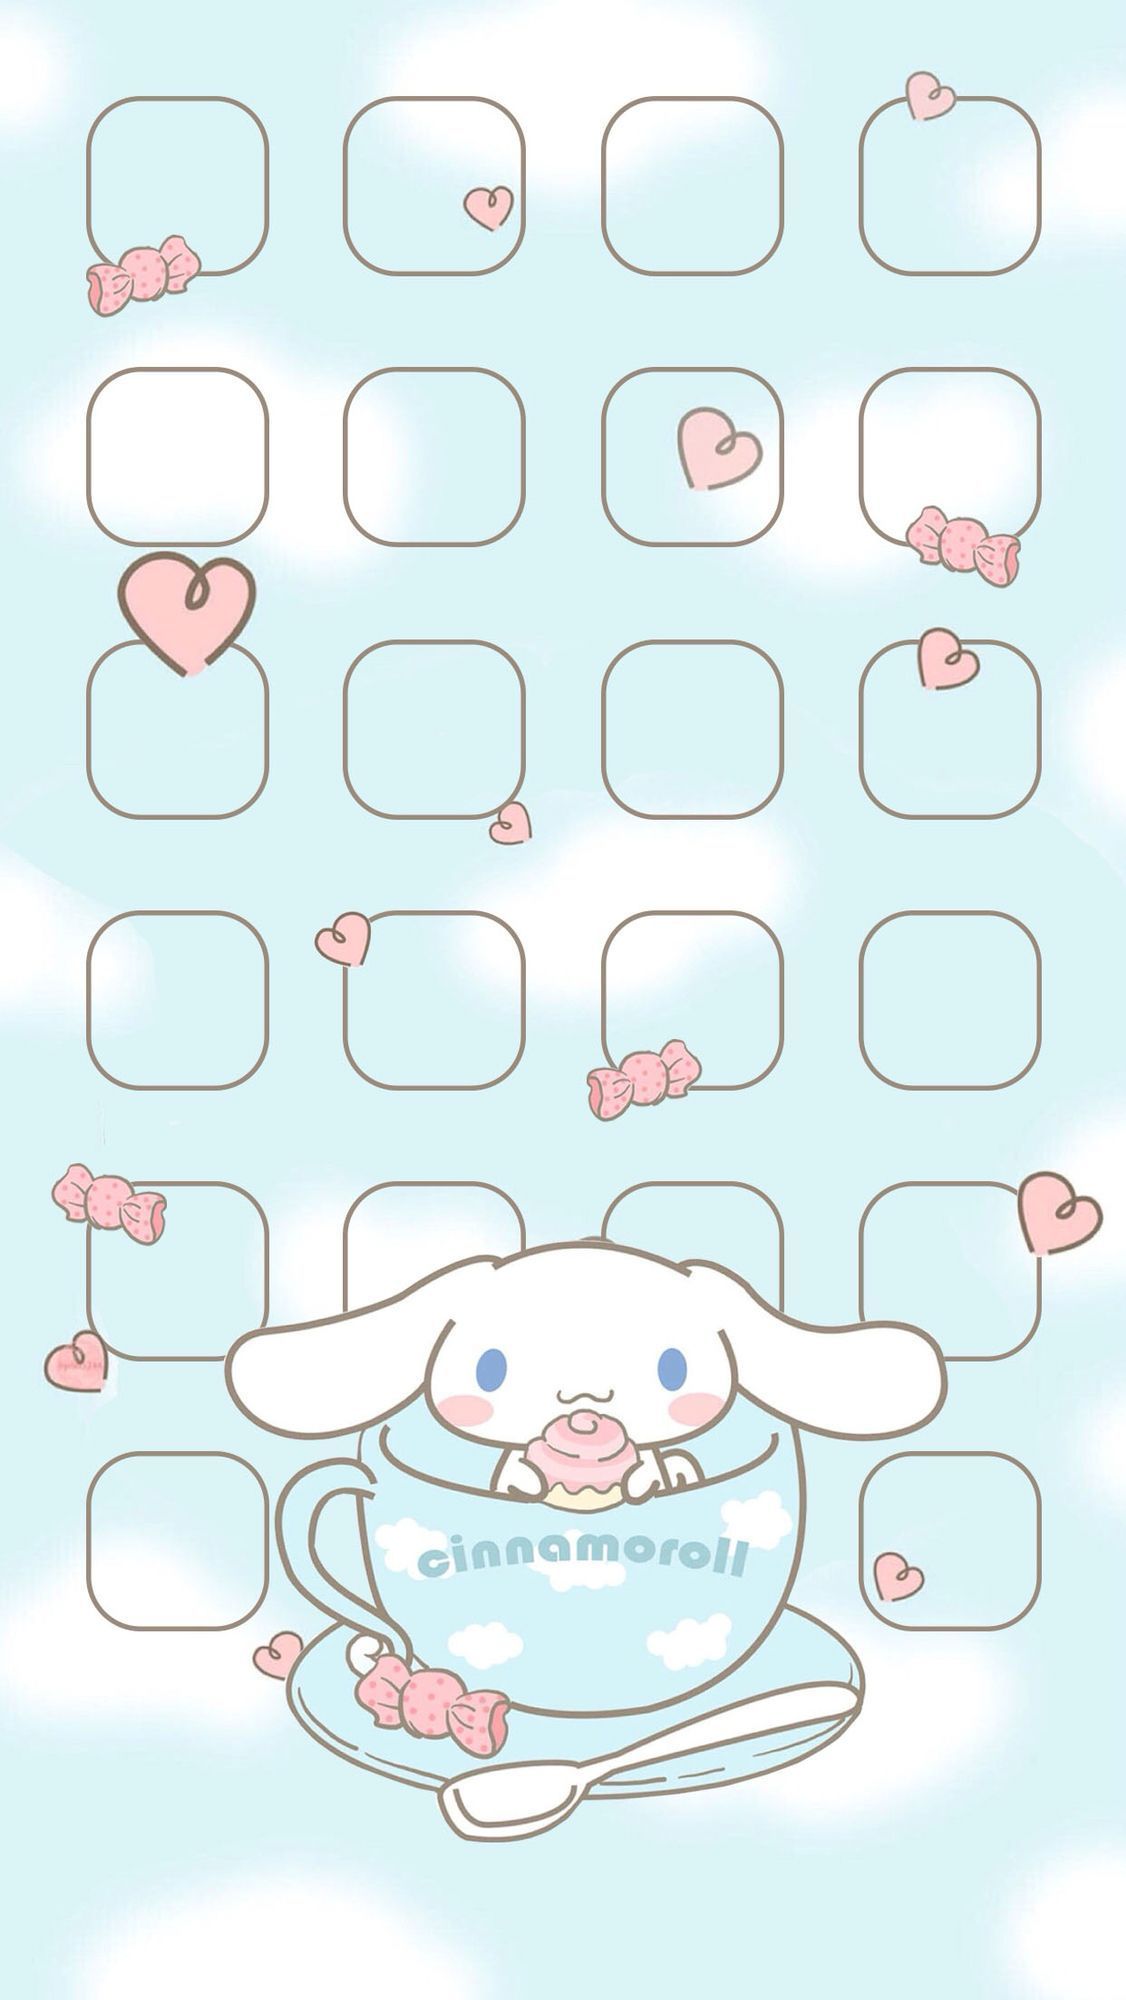 Cute Sanrio Wallpapers